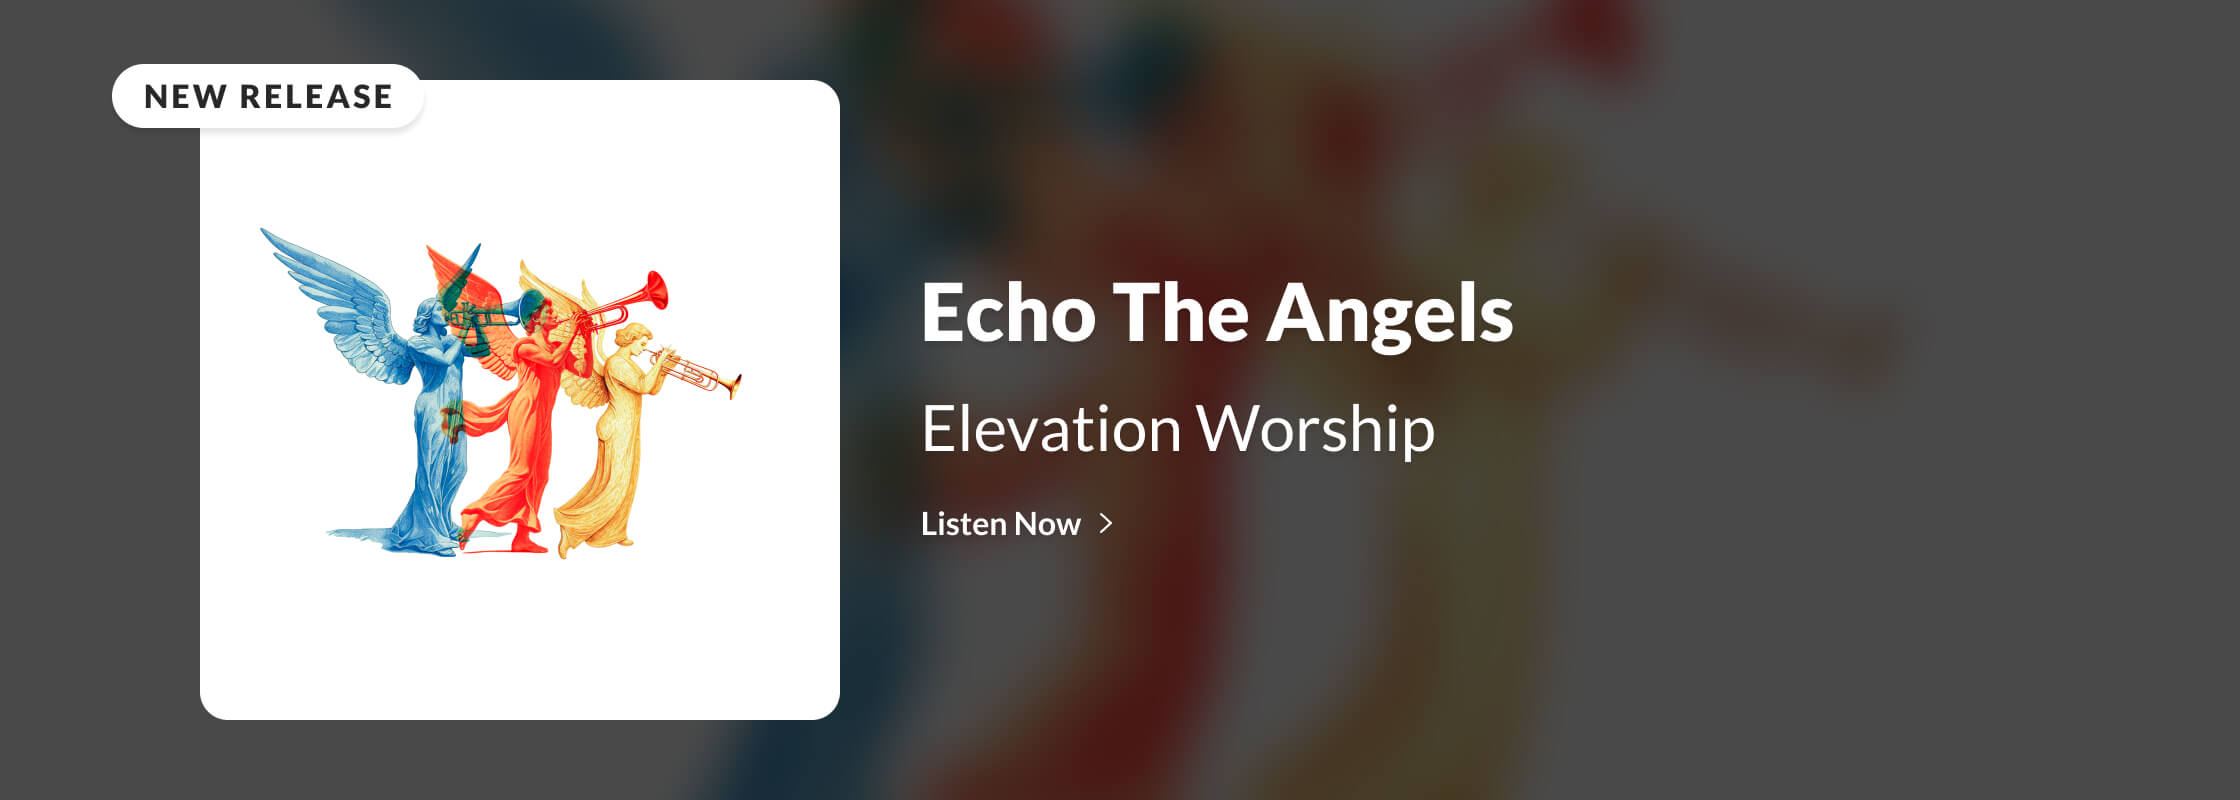 Elevation Worship | Echo The Angels